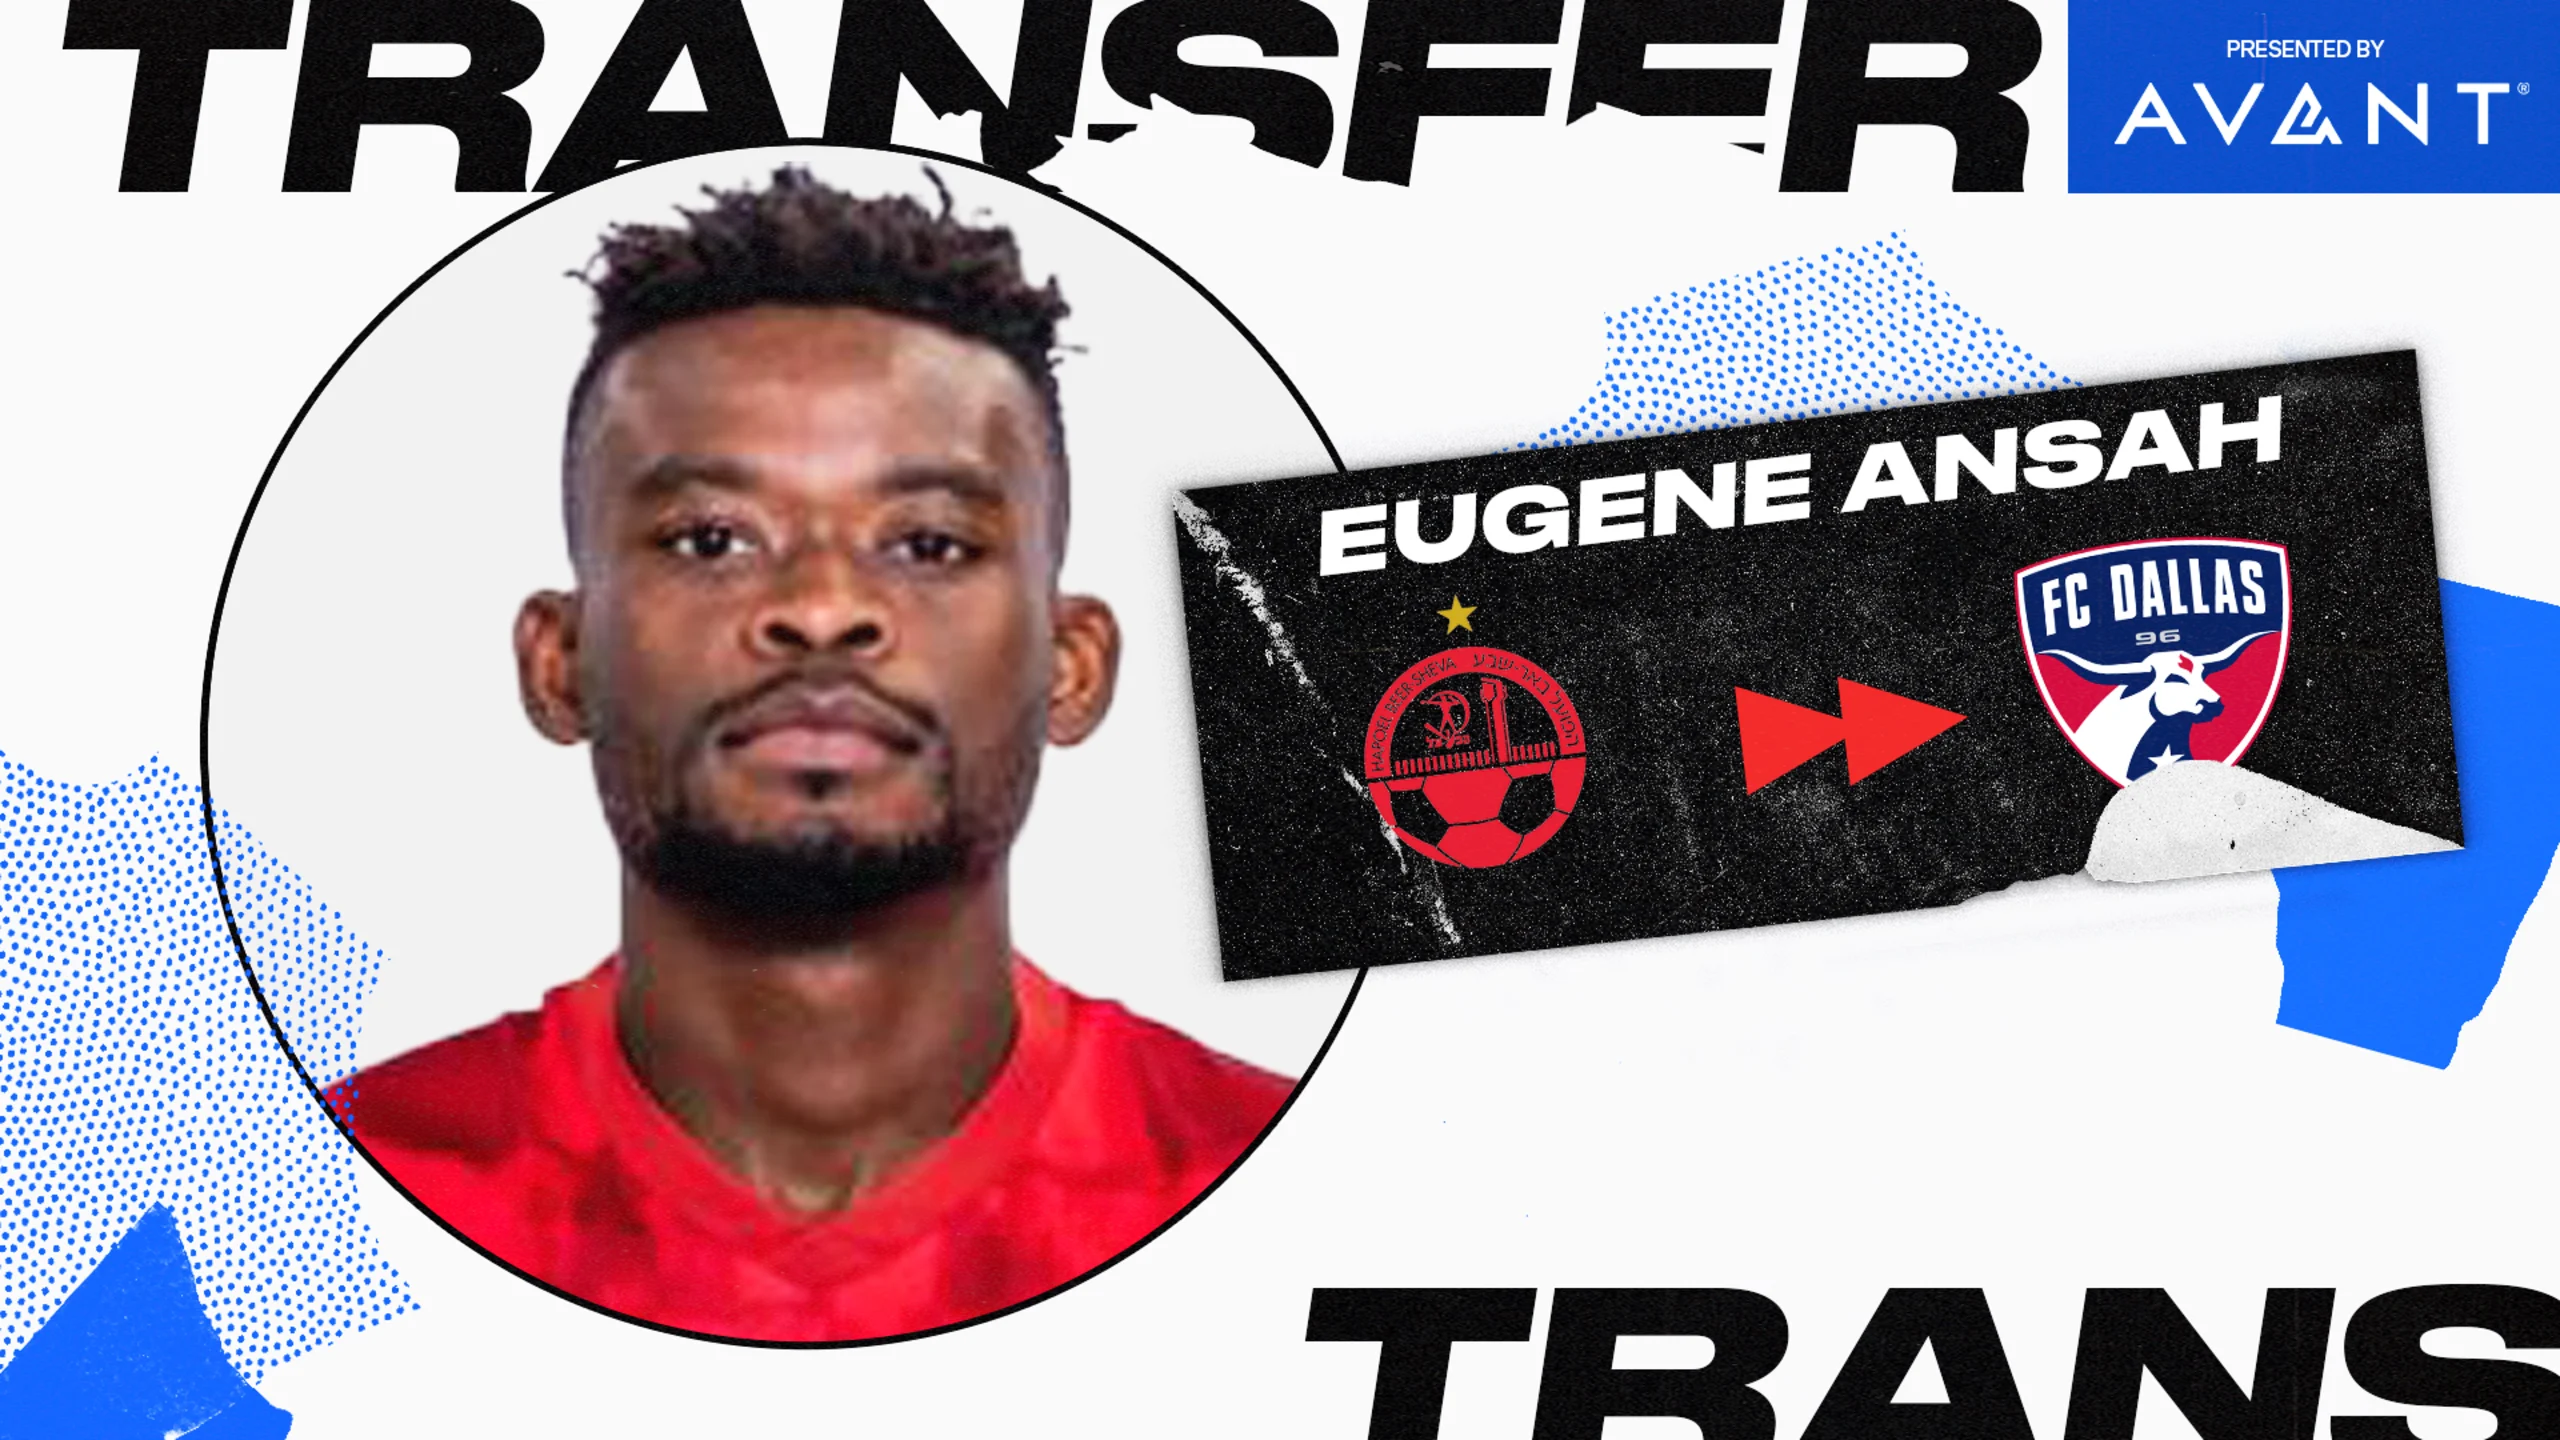 Ghanaian winger Eugene Ansah signed to FC Dallas